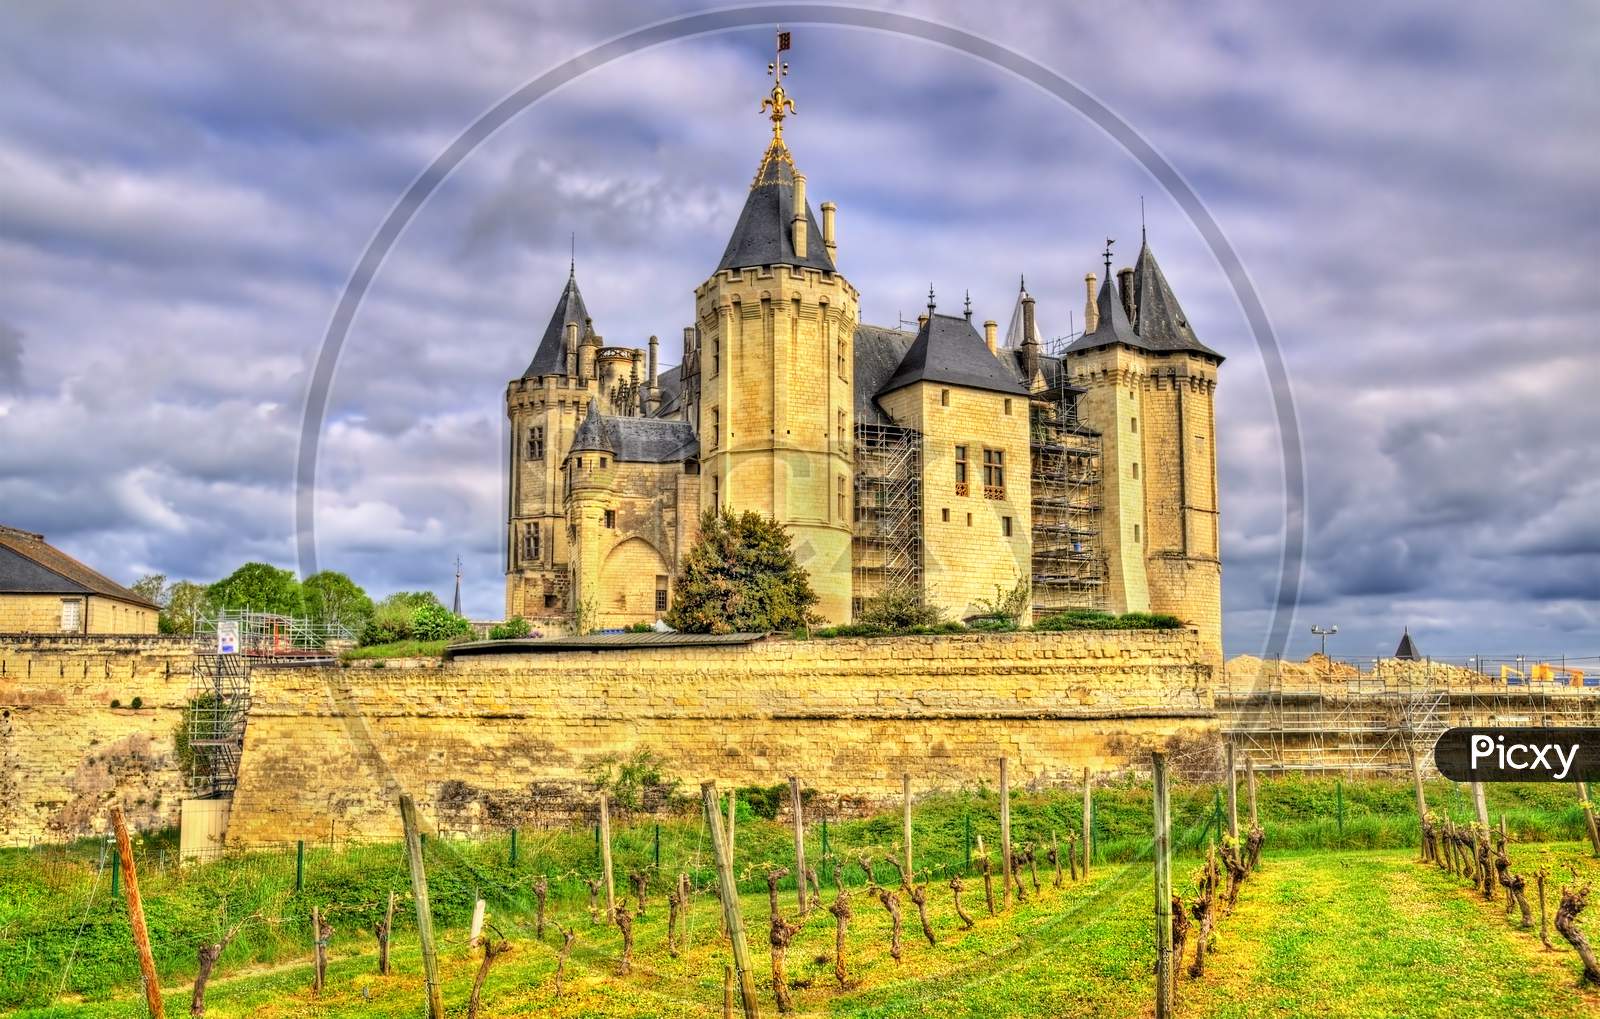 Chateau De Saumur In The Loire Valley, France